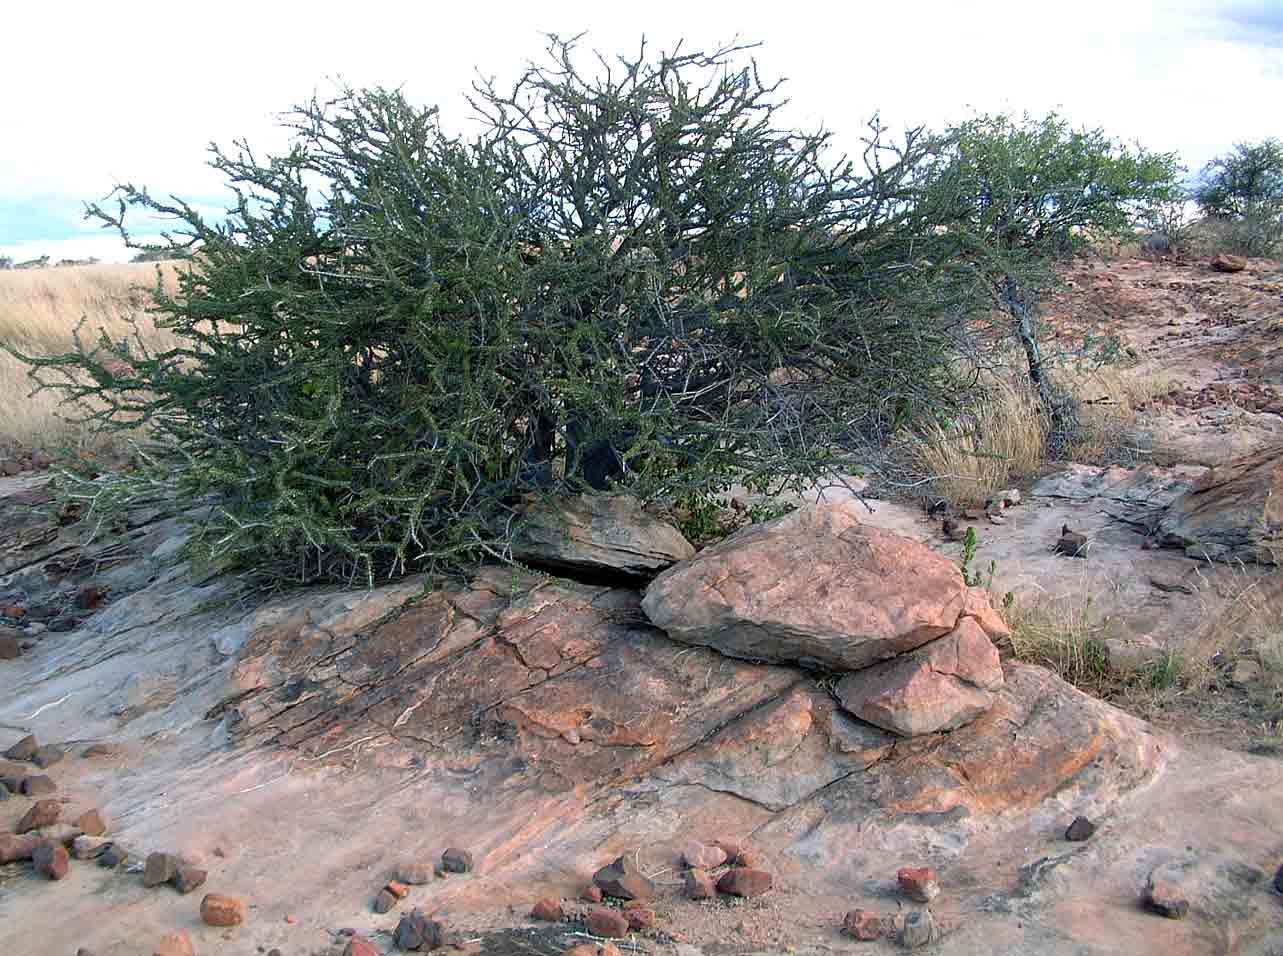 Boscia foetida subsp. rehmanniana